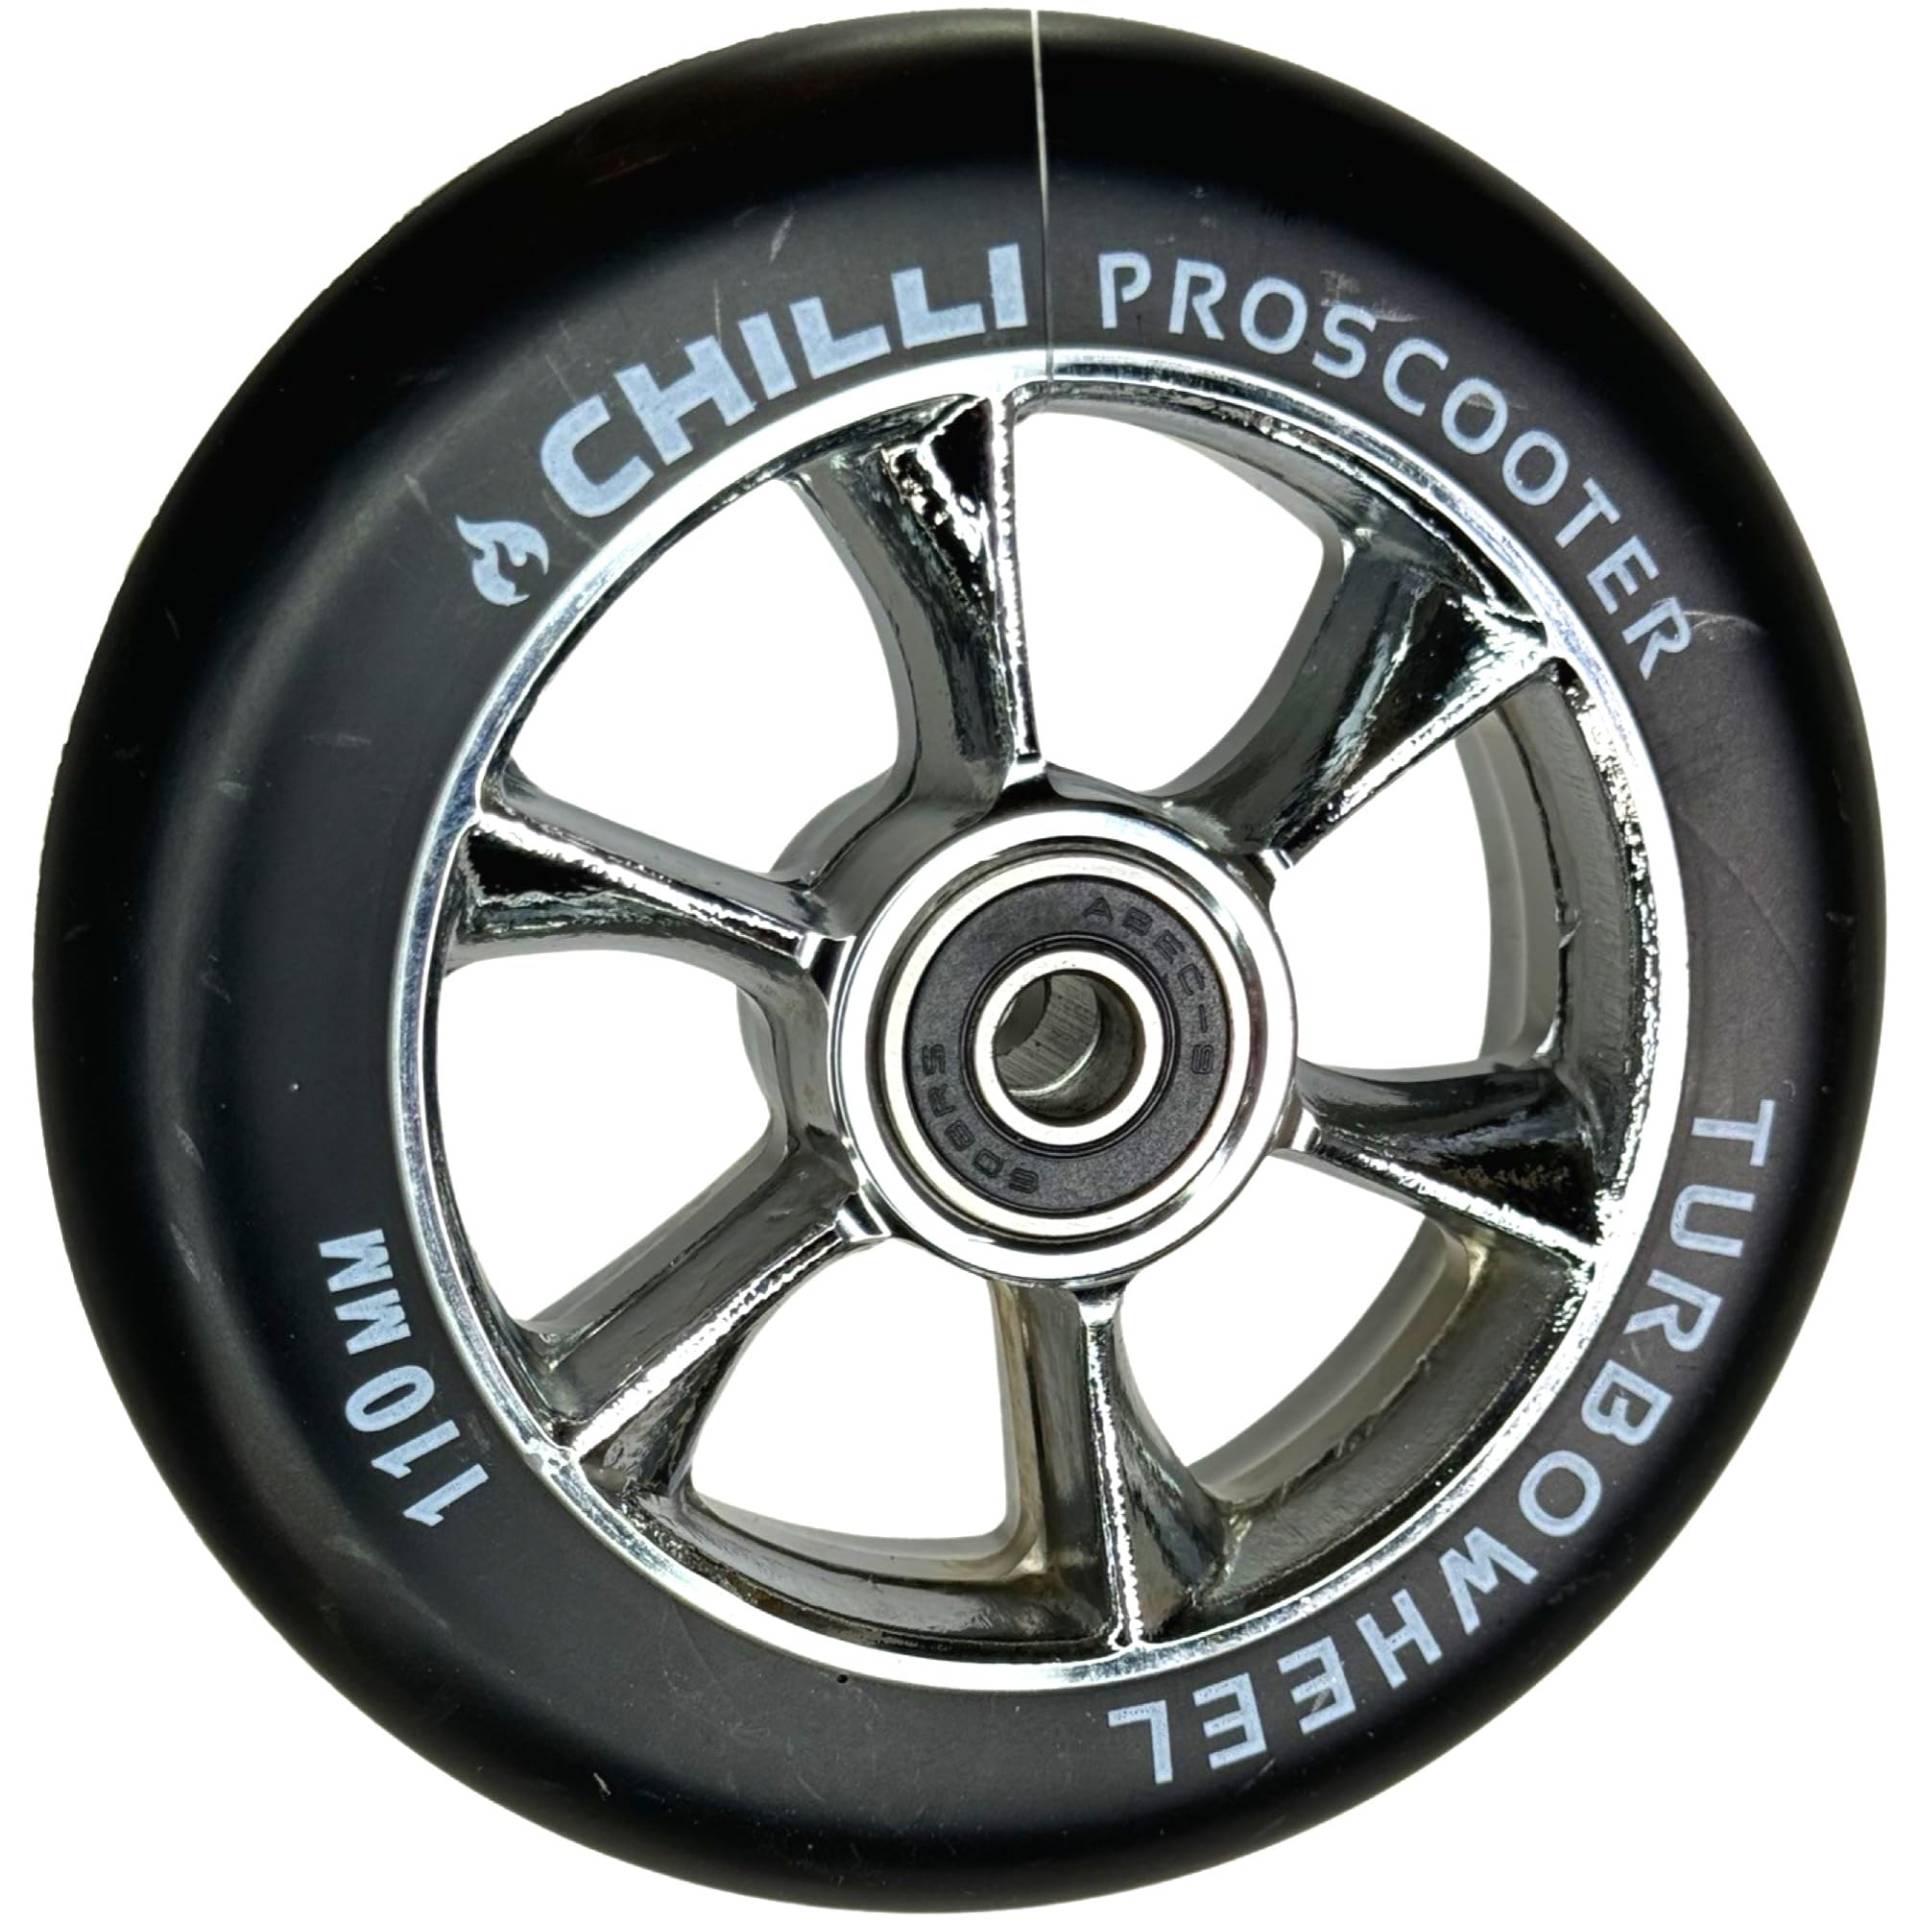 Chilli Pro Scooter Turbo 110mm Stunt Scooter Rolle 110mm I Trick I Tret I Roller I Wheel Chrome von F26